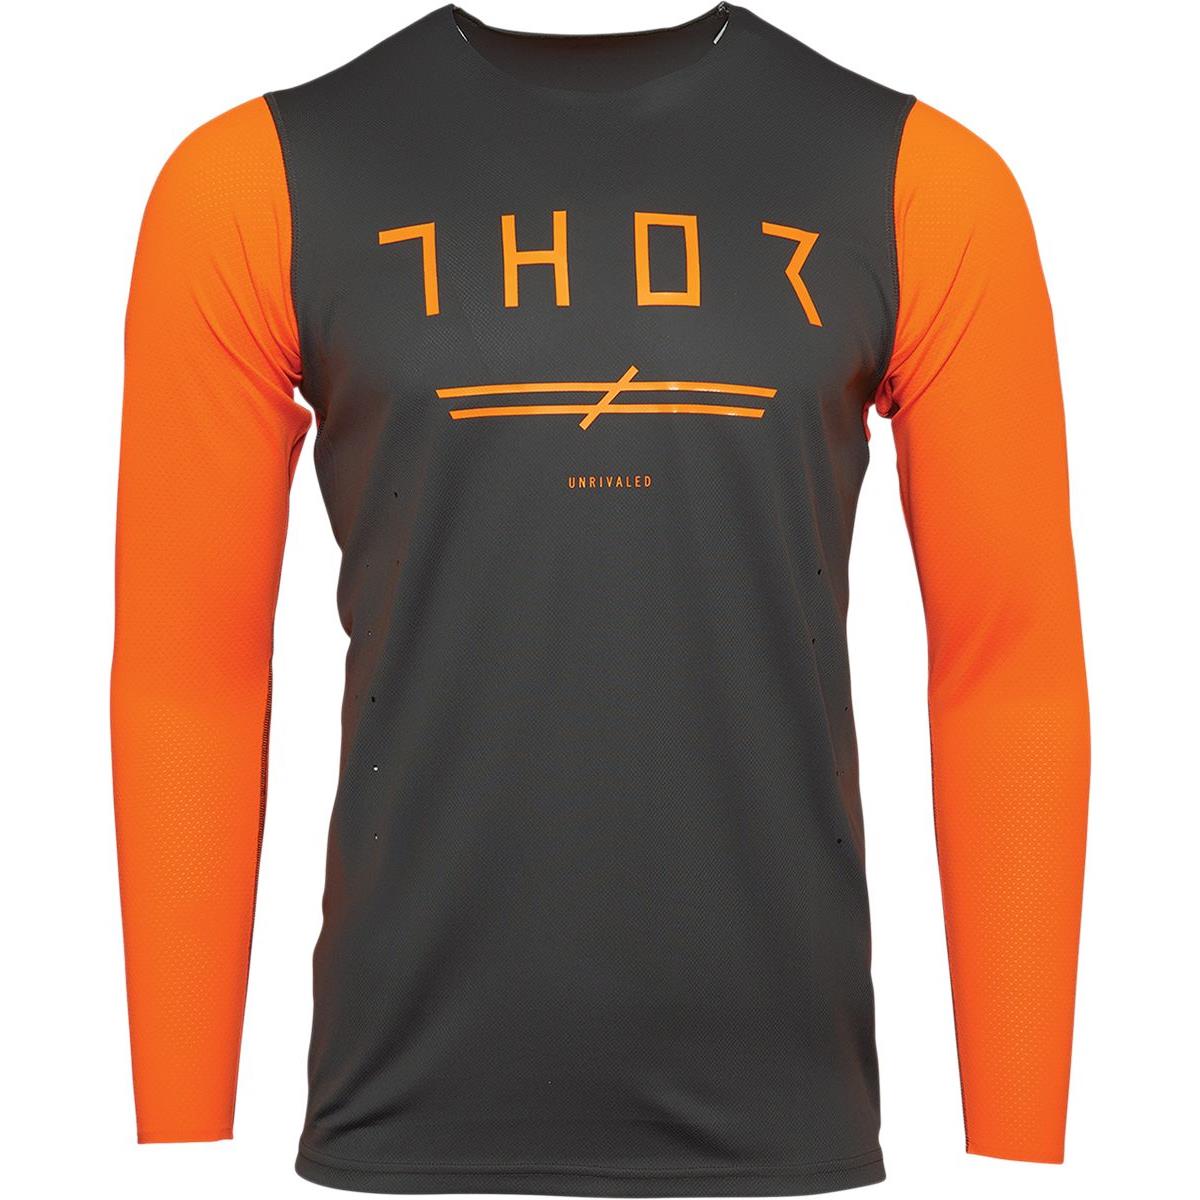 Thor Maglia MX Prime Pro Unrivaled - Charcoal/Flo Orange